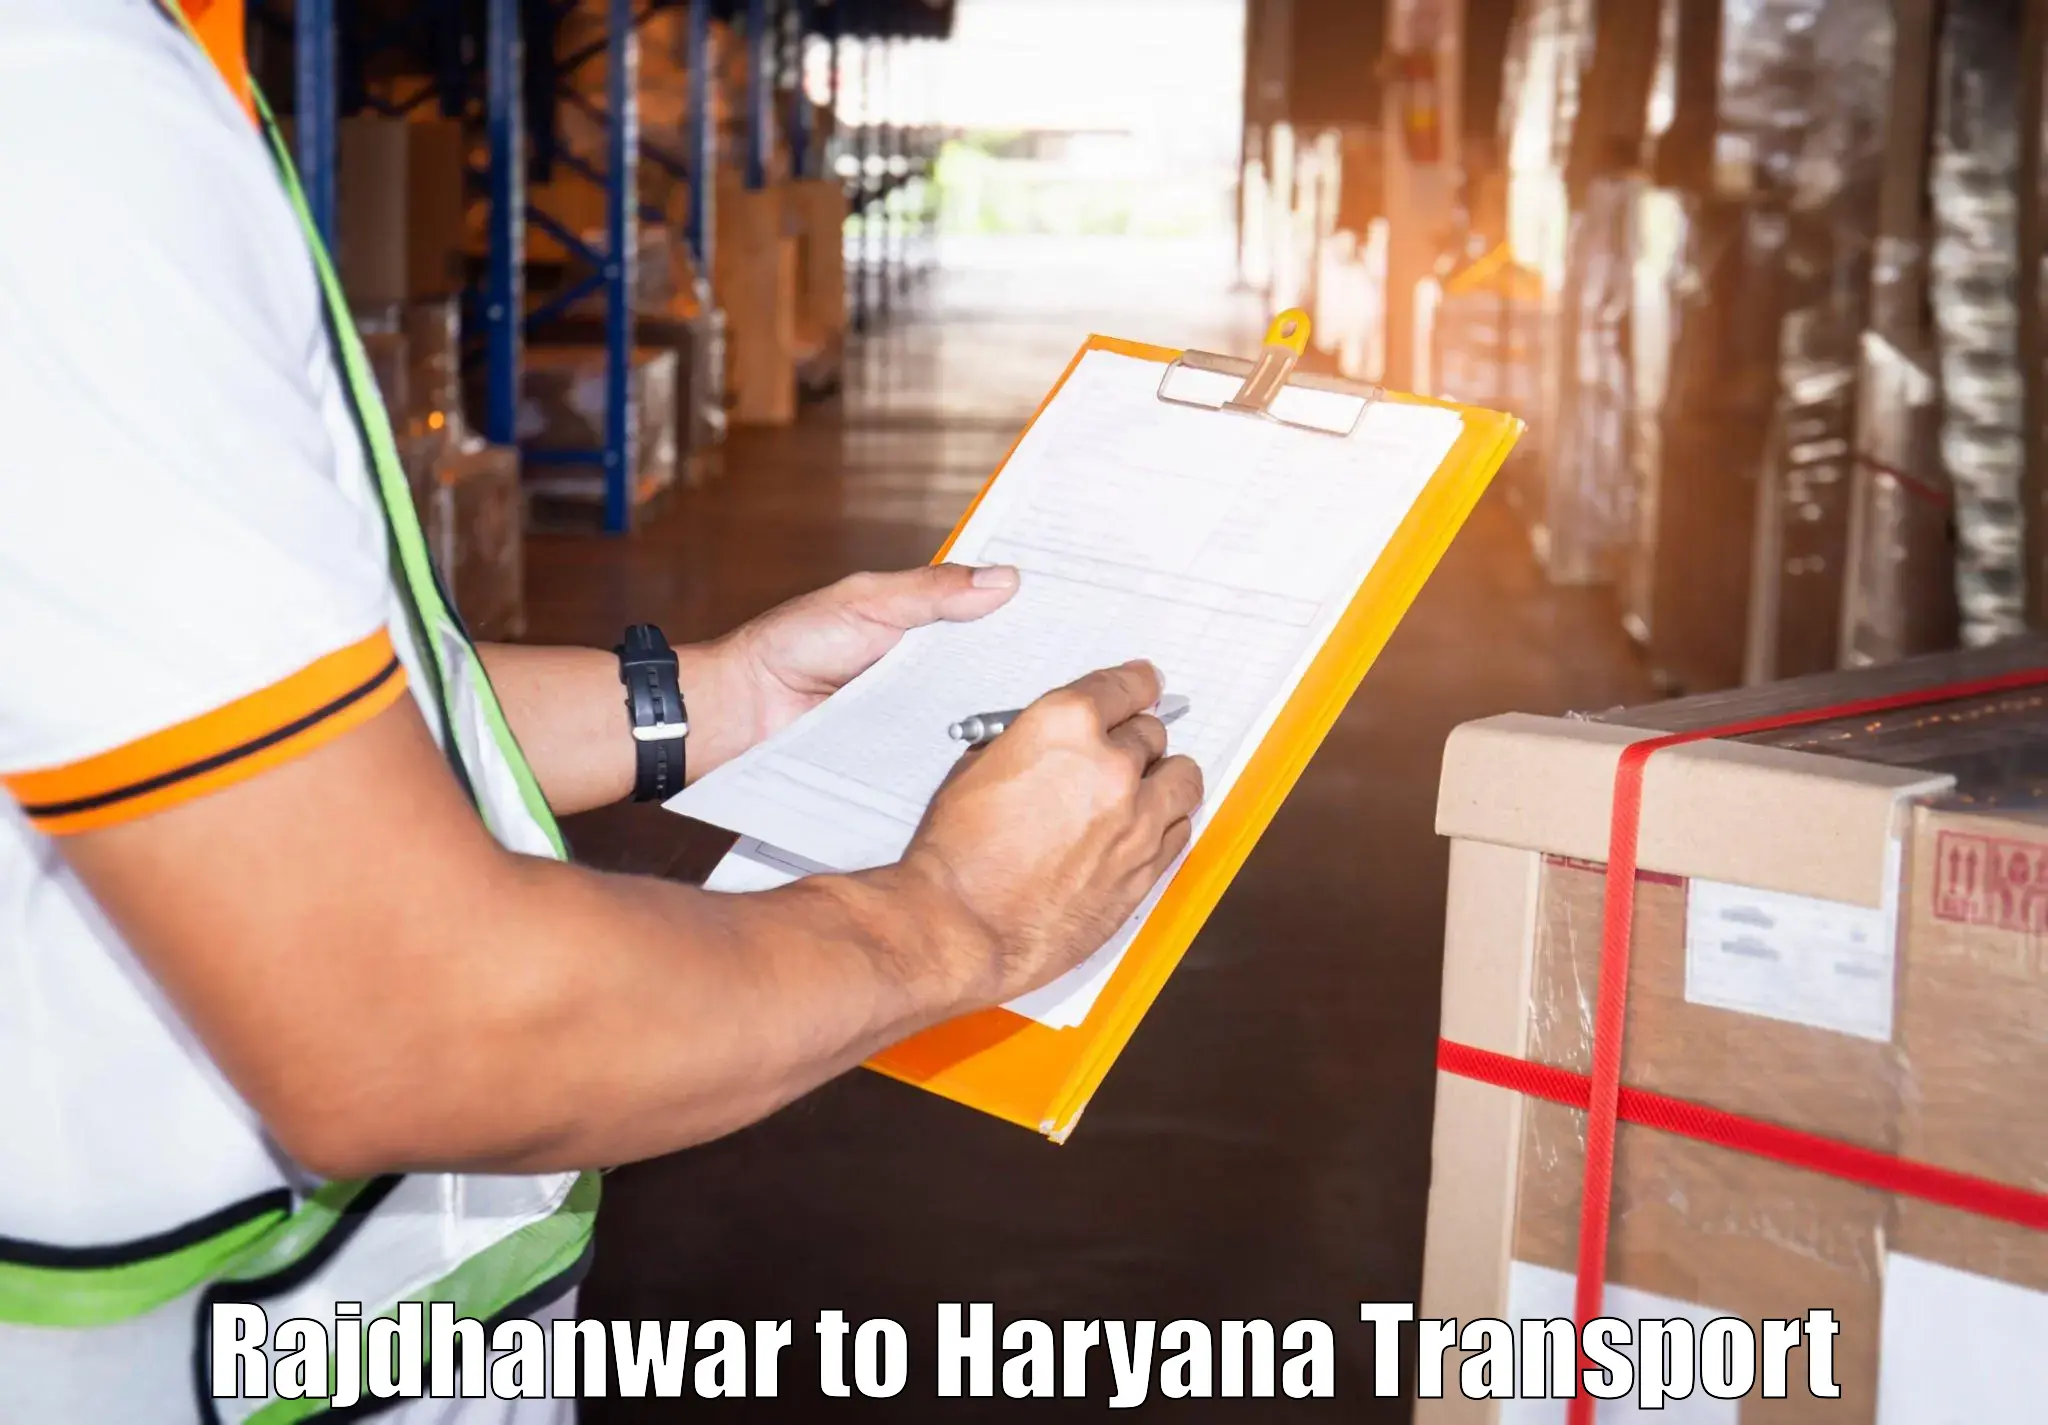 Container transport service in Rajdhanwar to Hansi